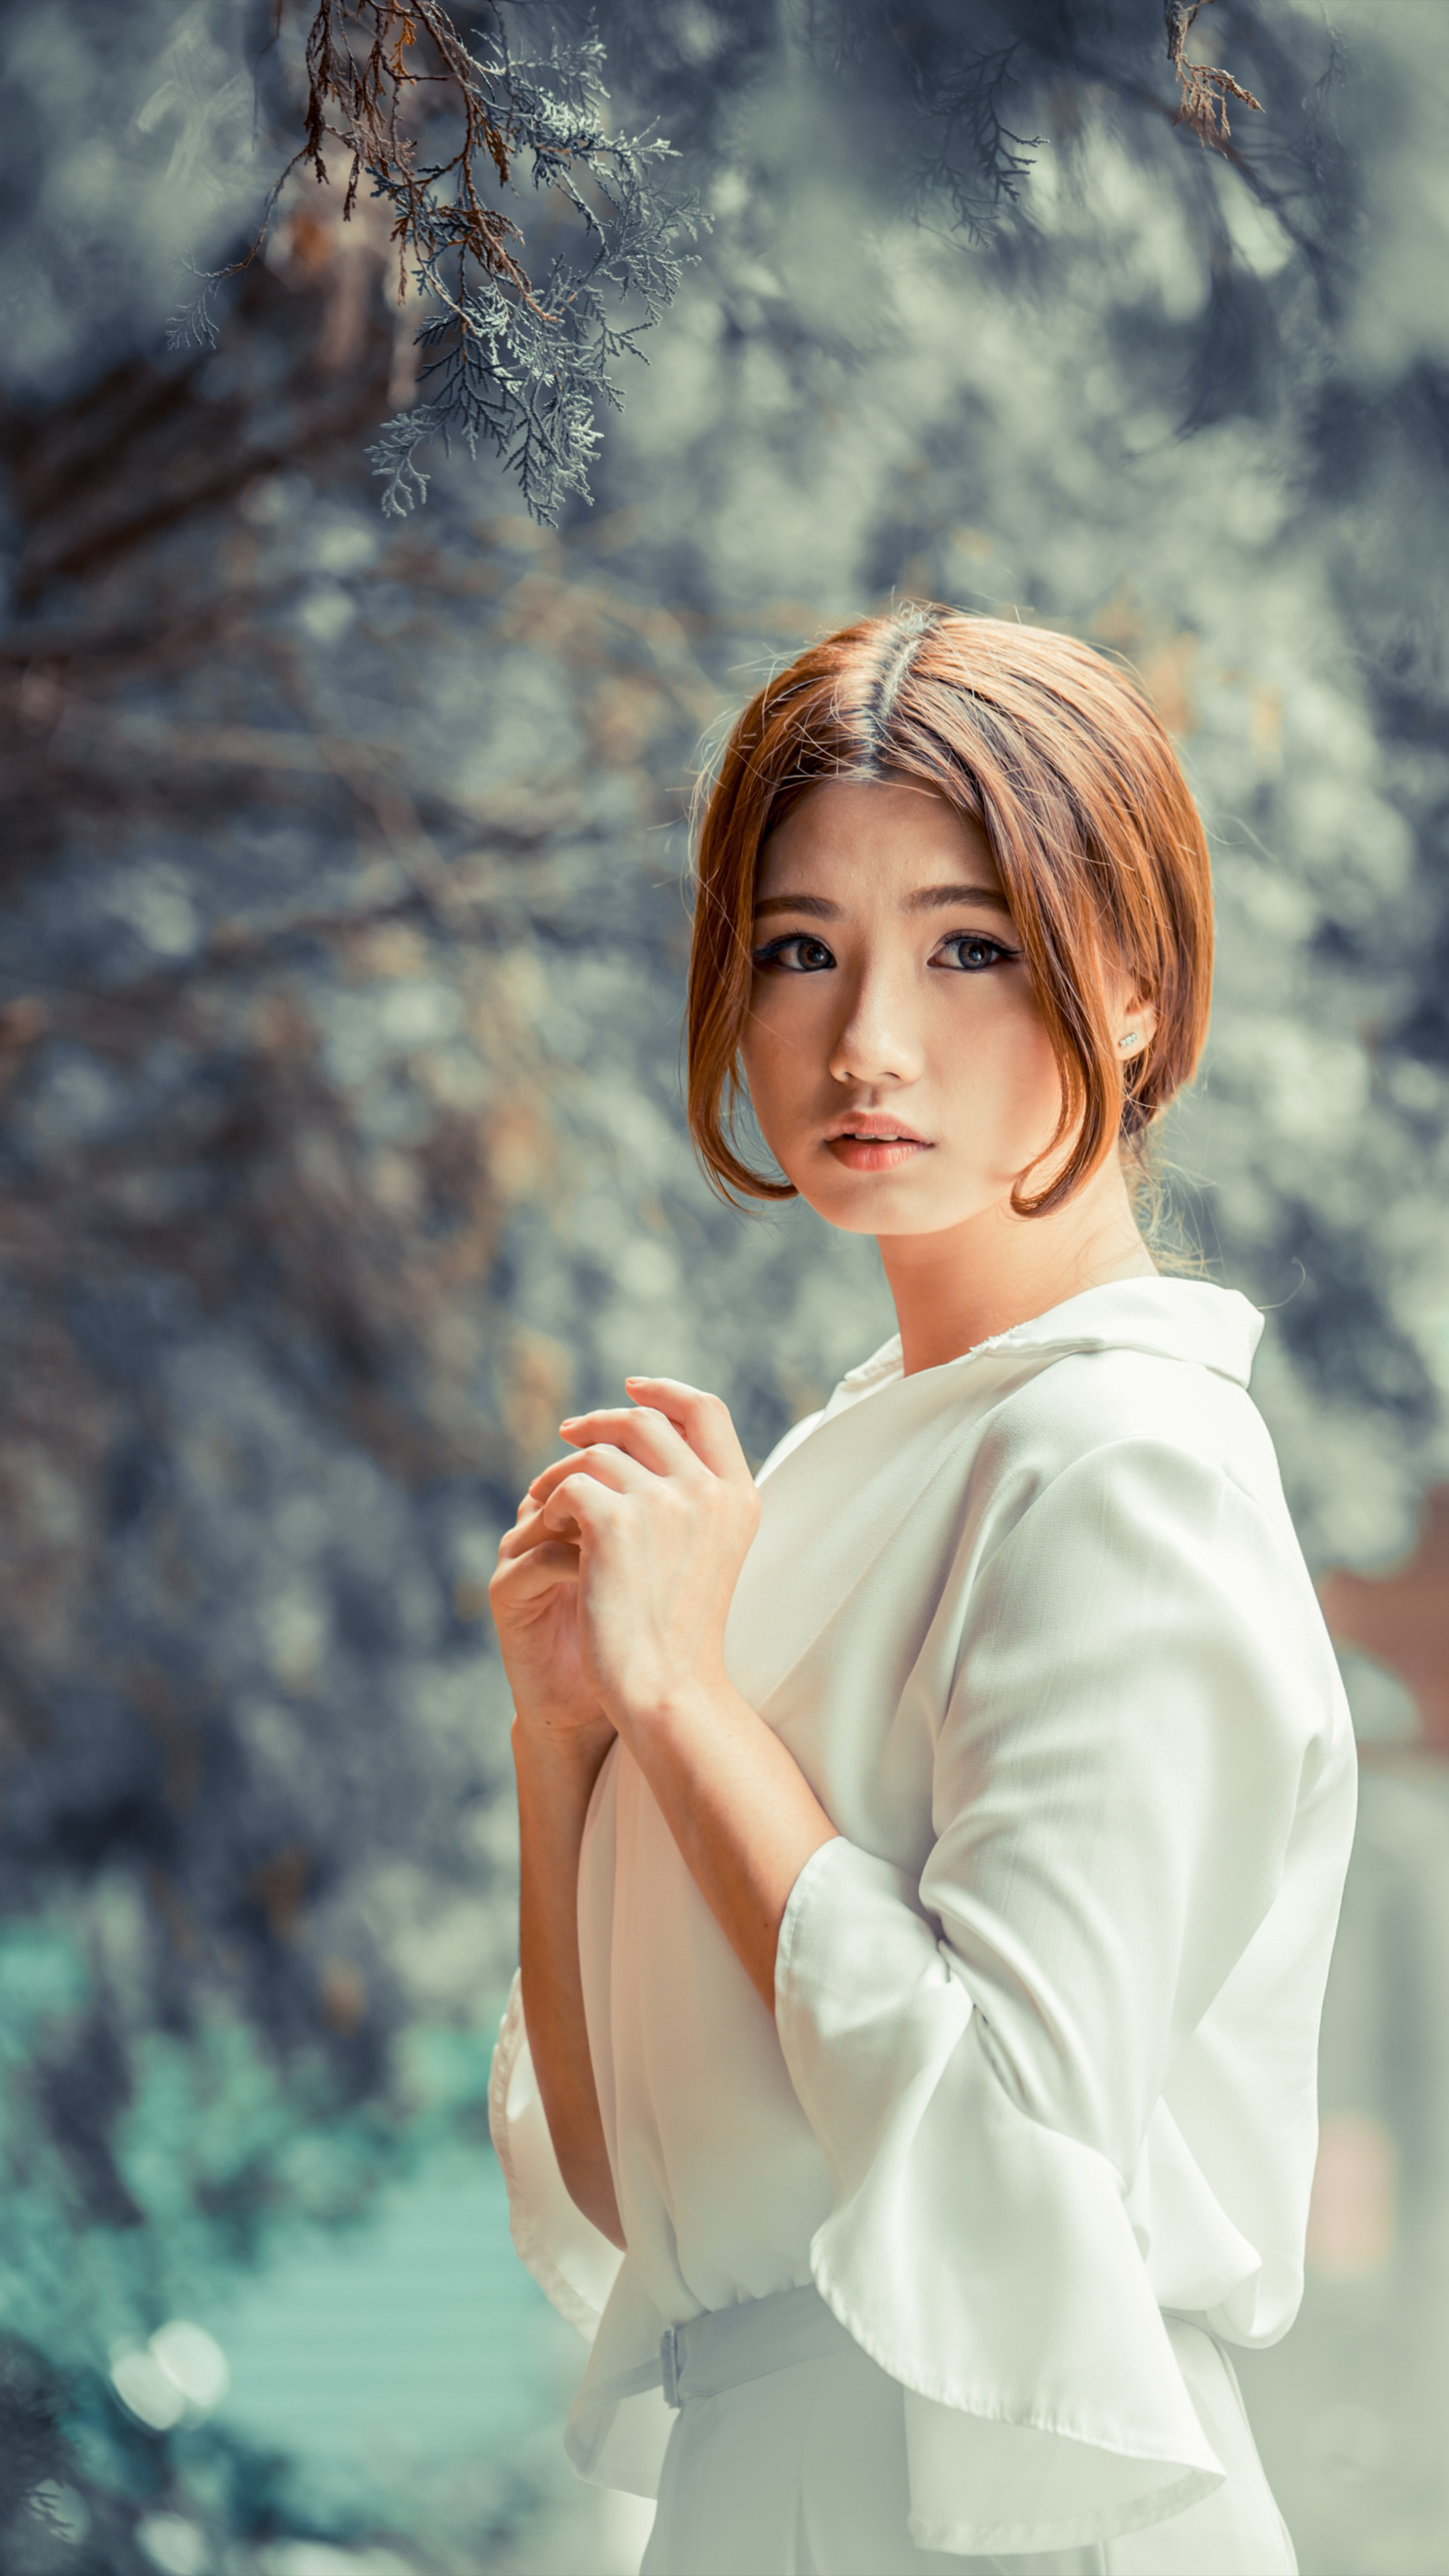 Cute Asian Girl Winter Photohoot Free 4K Ultra HD Mobile Wallpaper